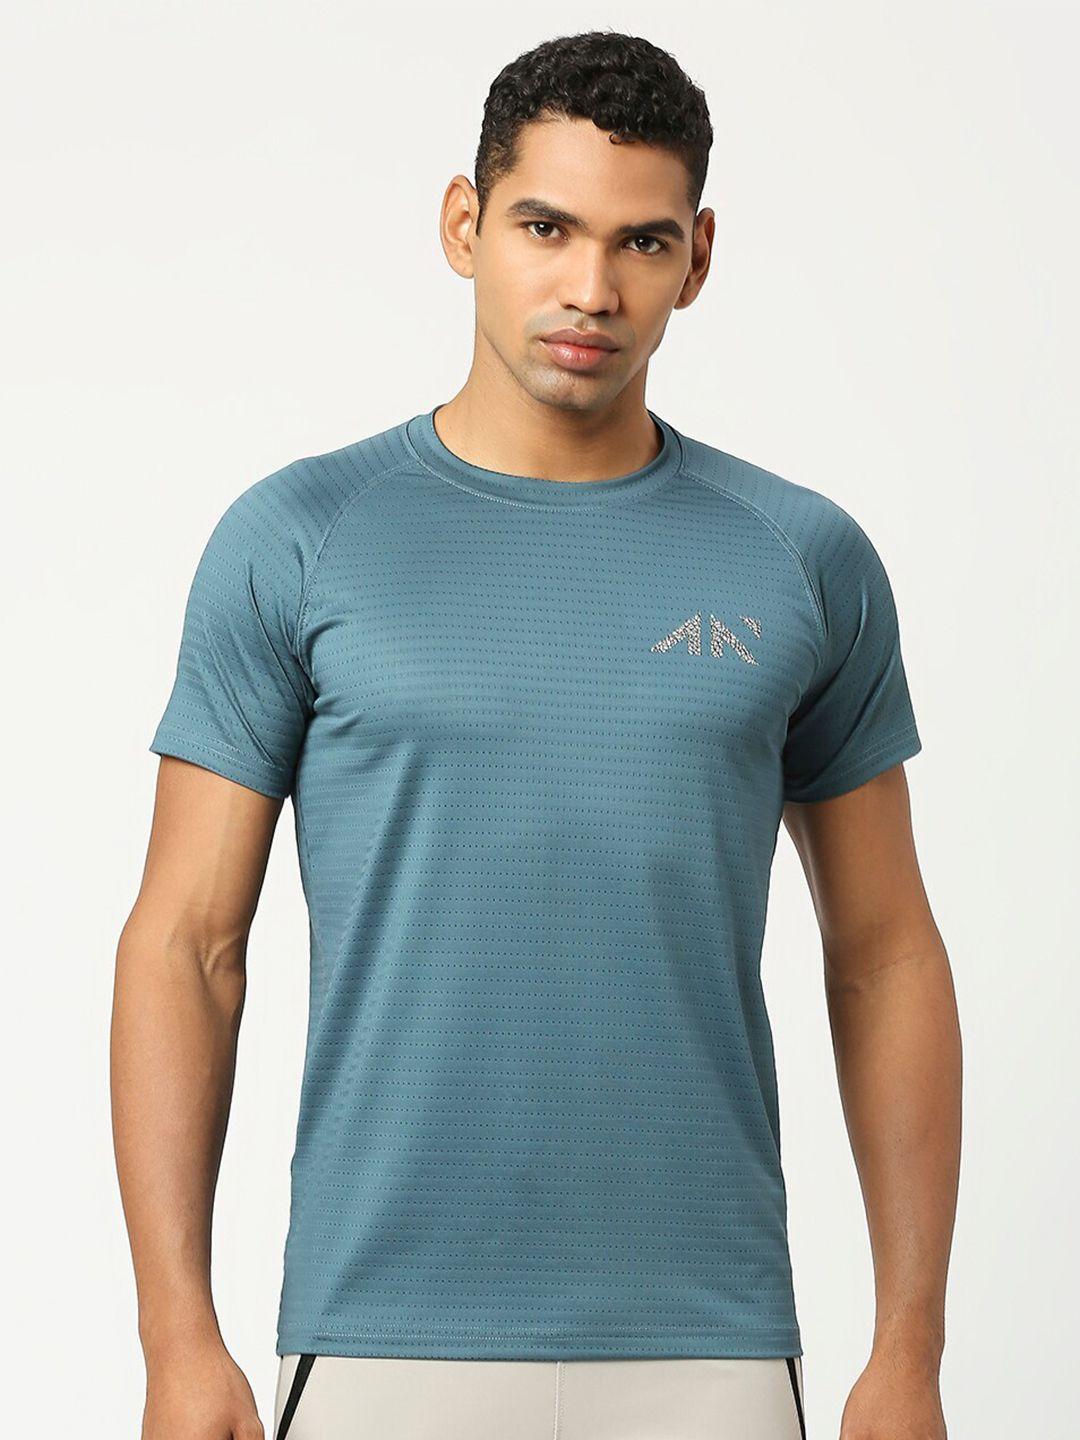 aesthetic nation self design round neck raglan sleeves dri-fit sports t-shirt